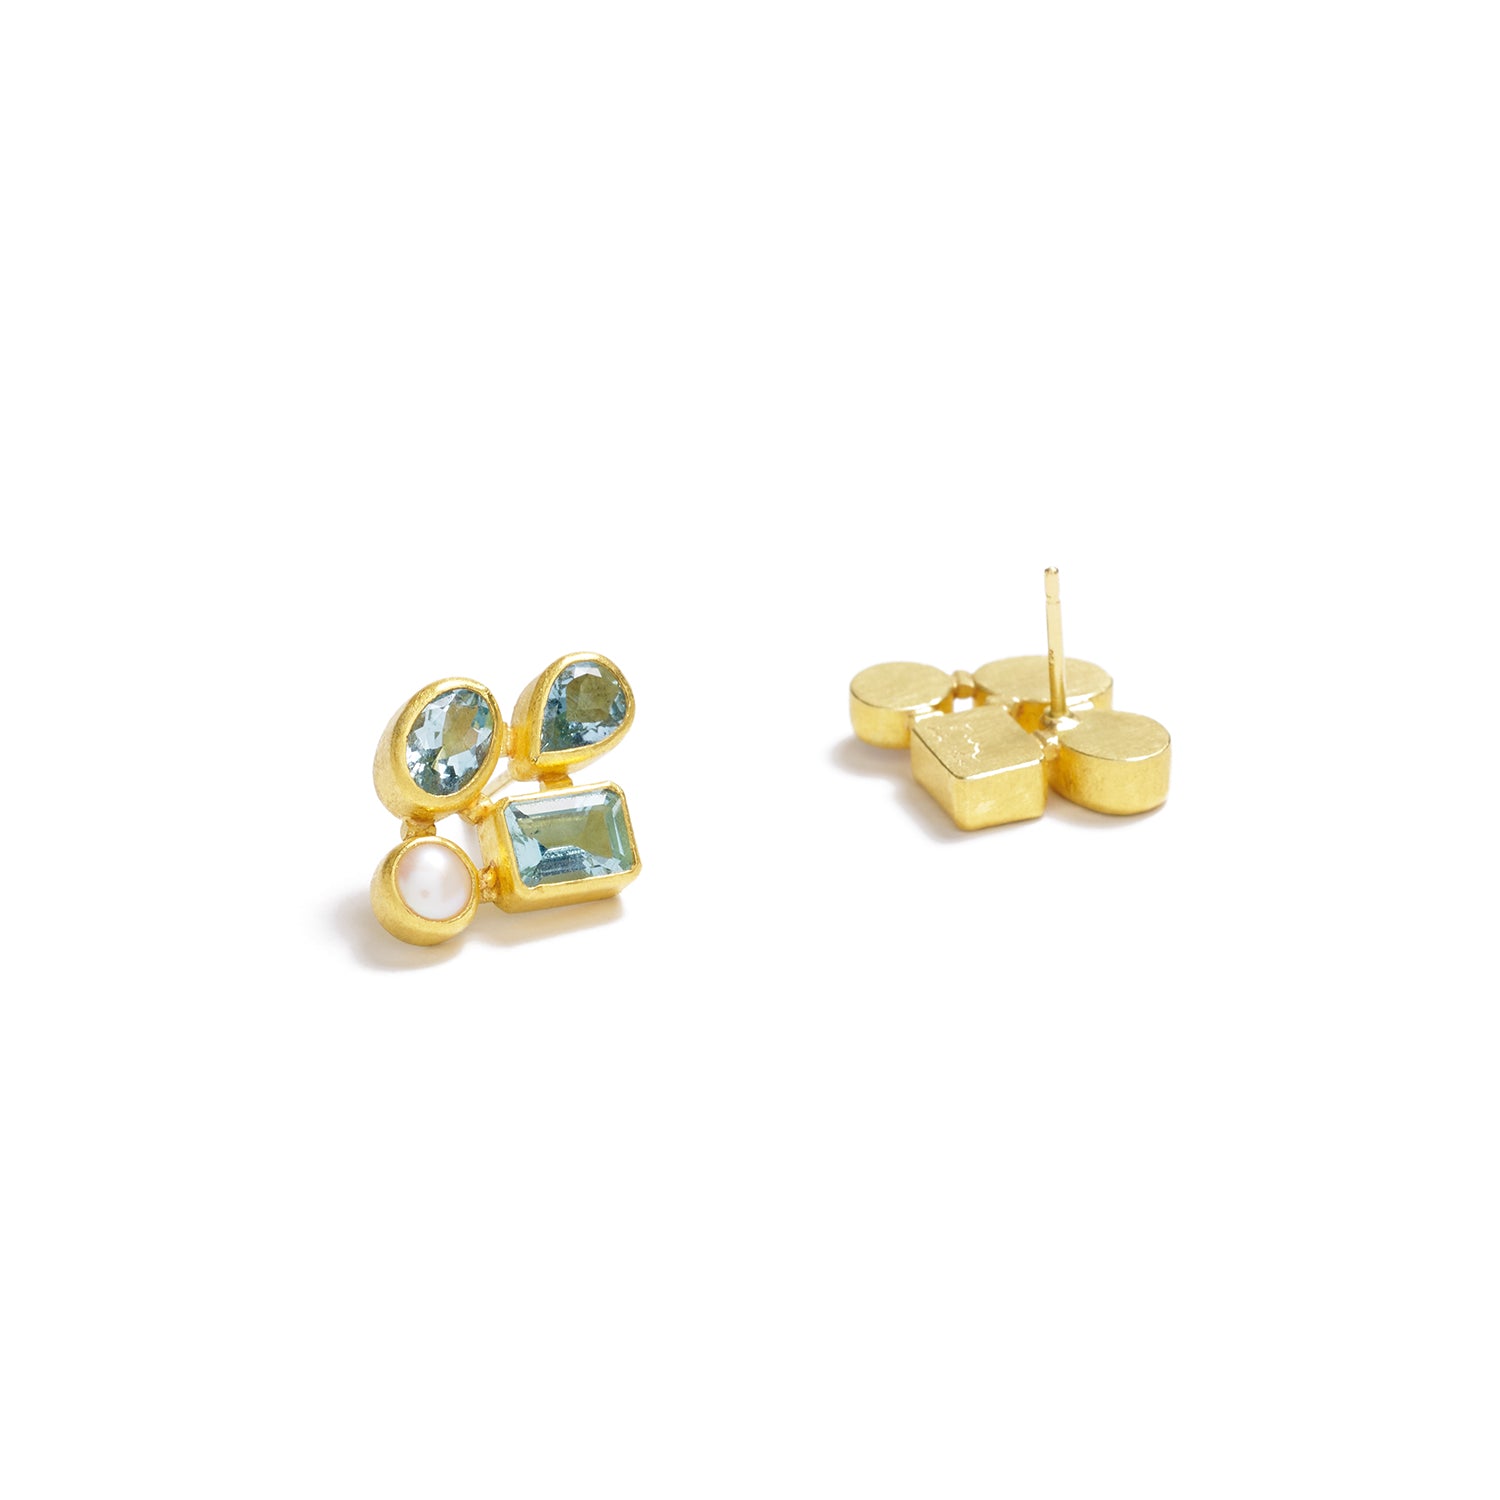 Aqua & Pearl Cluster Earrings